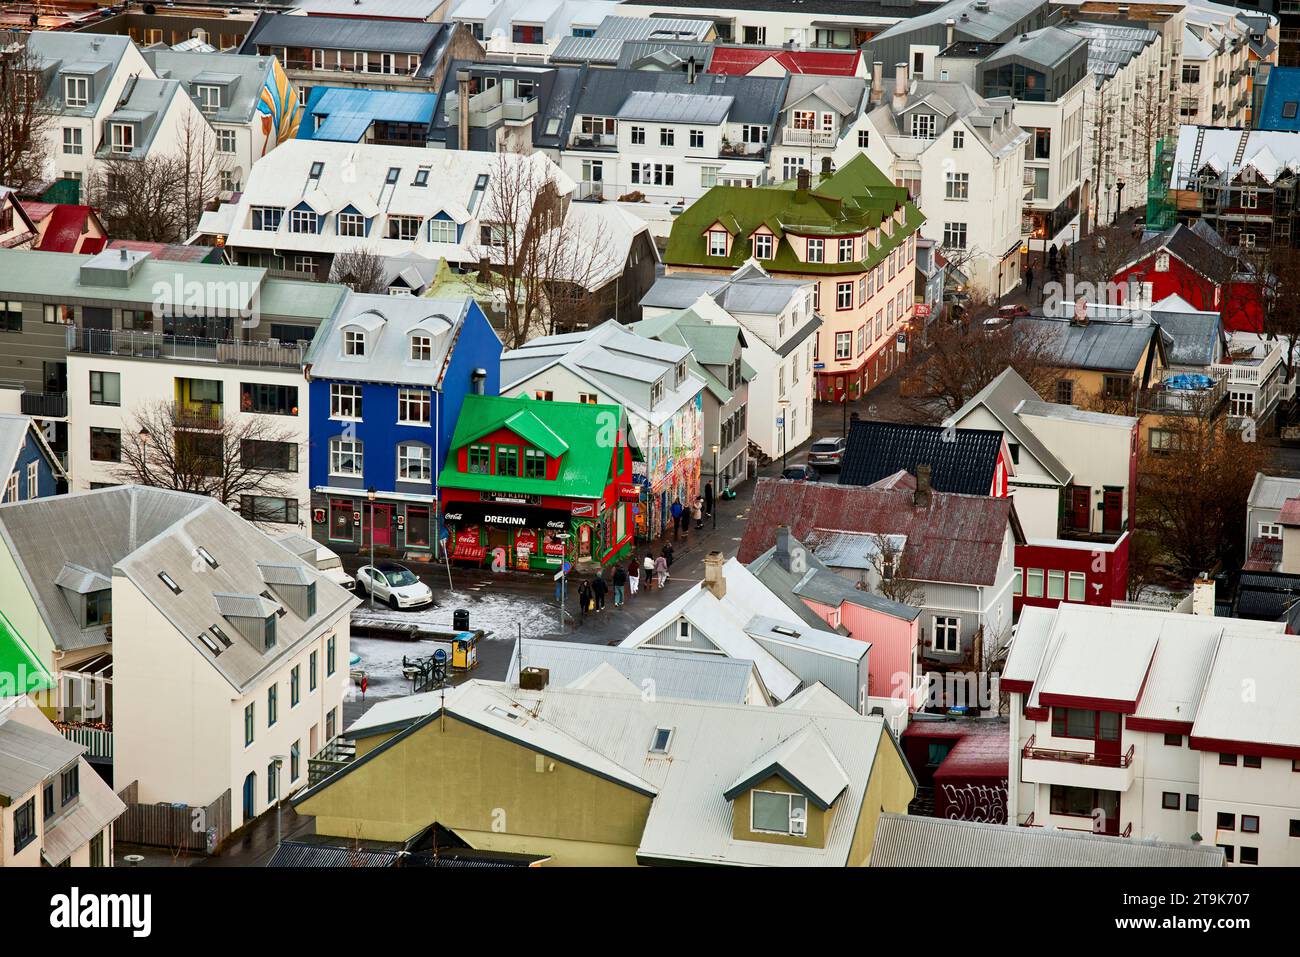 La capitale de Reykjavík Islande est Skyline avec le Söluturn restaurant de restauration rapide Drekinn Grill en rouge vert Banque D'Images